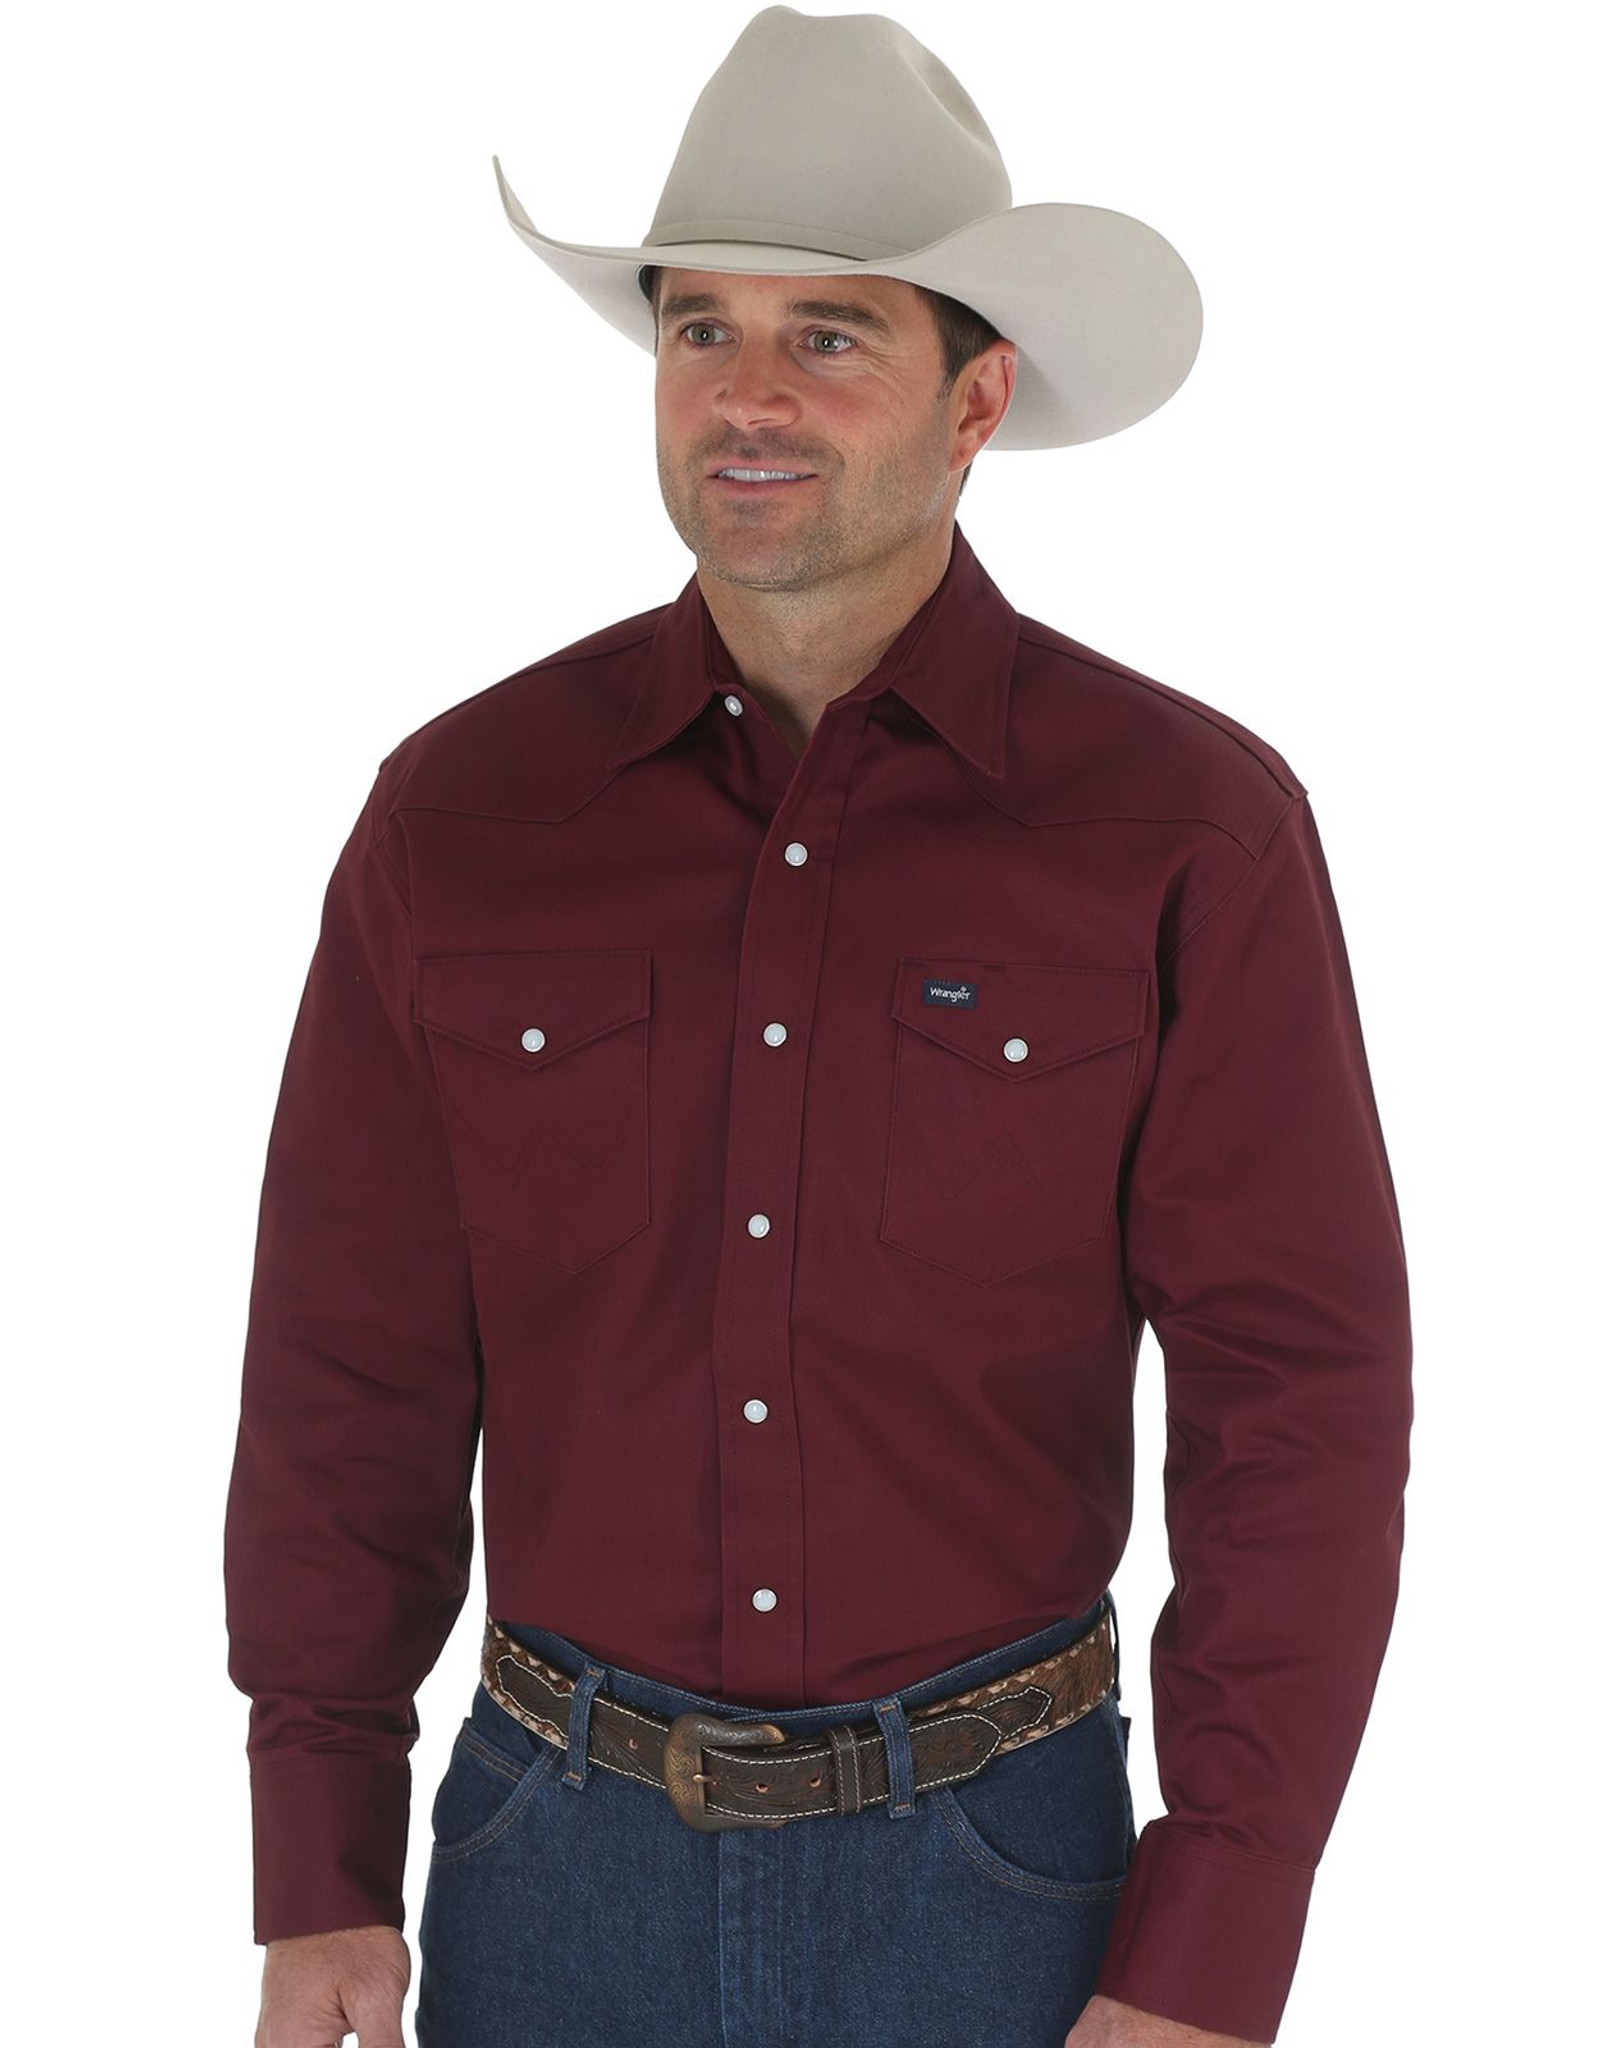 Wrangler Men's Basic Twill Long Sleeve Solid Snap Work Shirt - Red Oxide